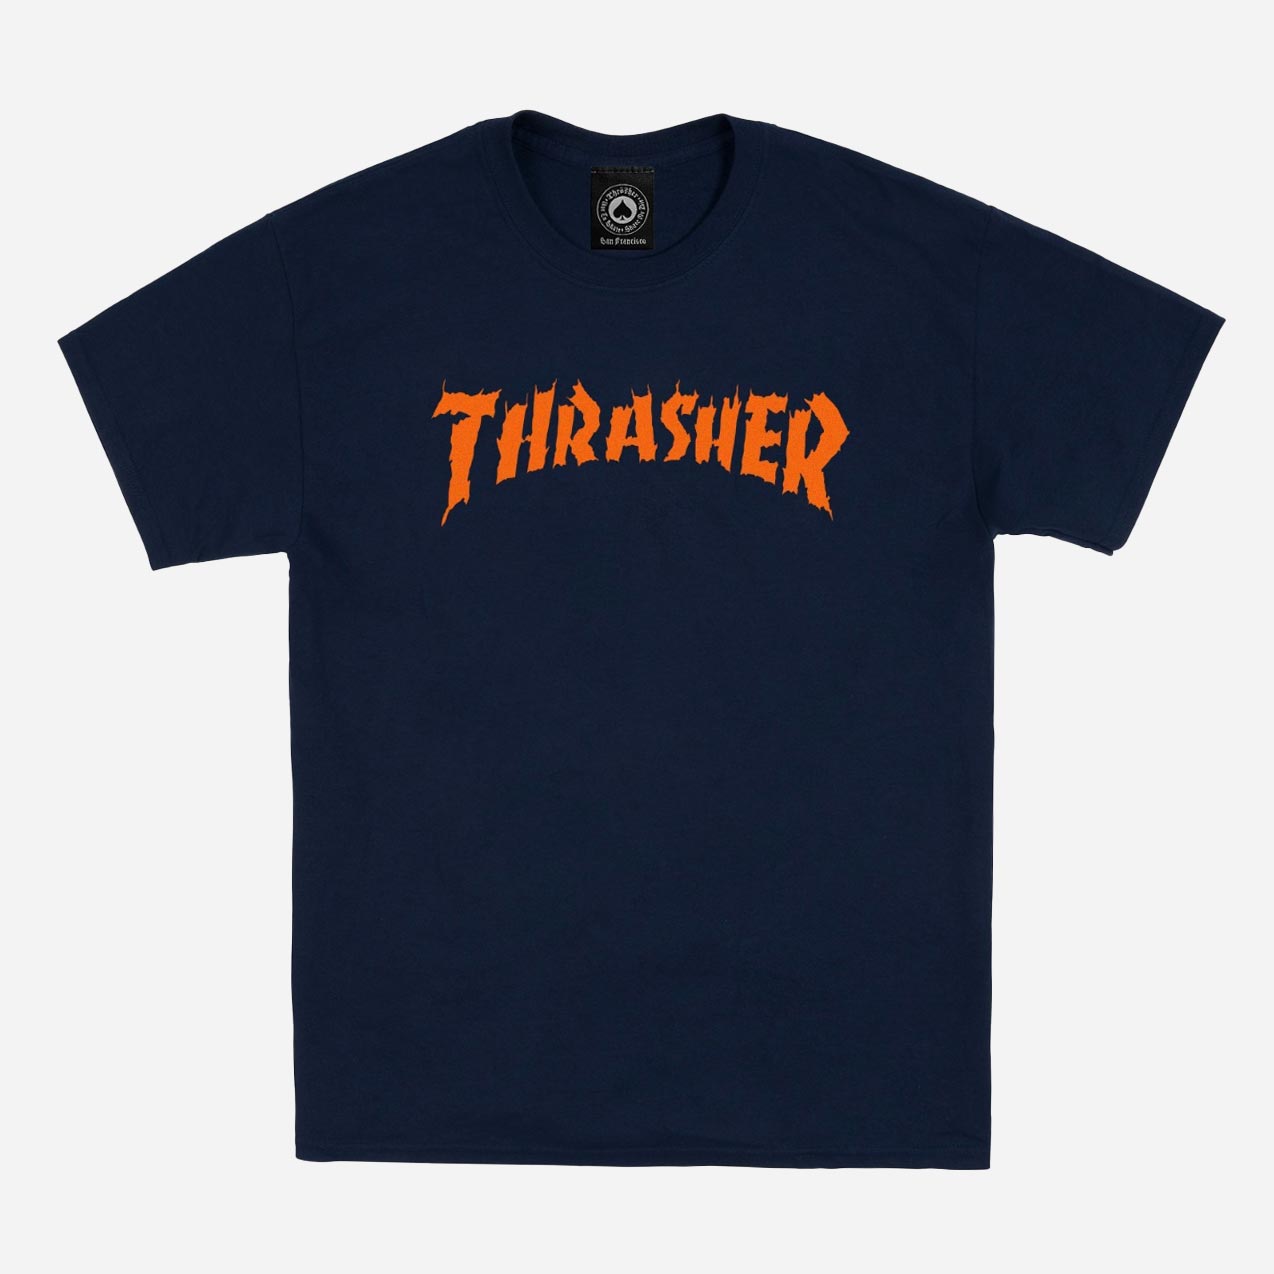 Thrasher Burn It Down Tee - Navy